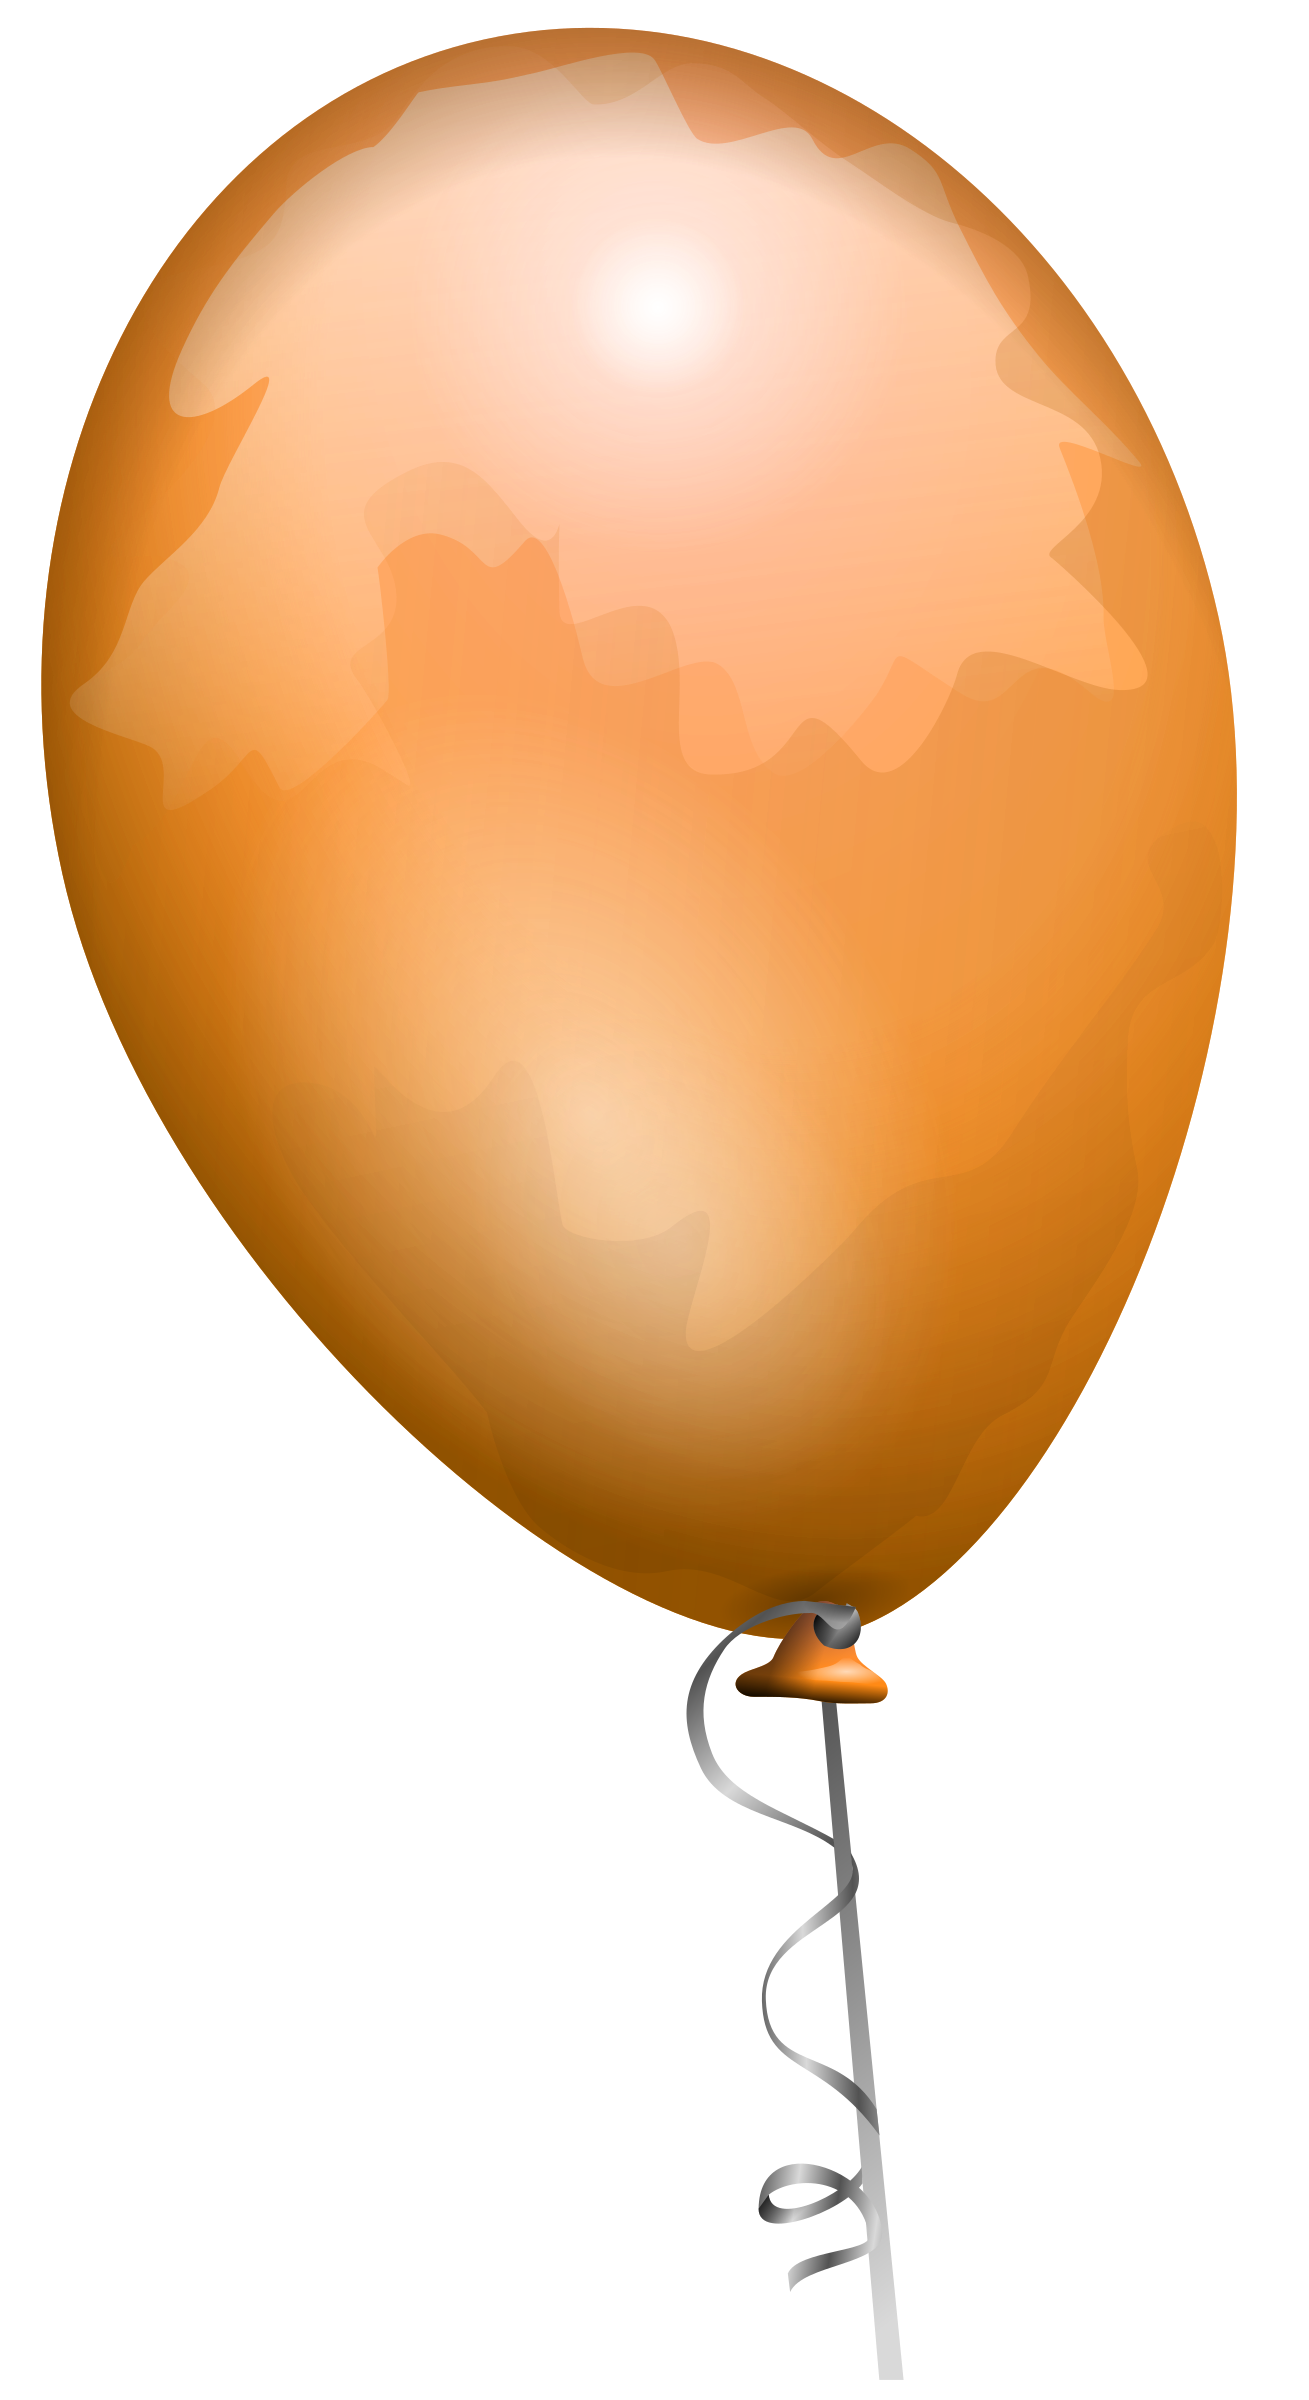 Orange big image png. Peach clipart balloon